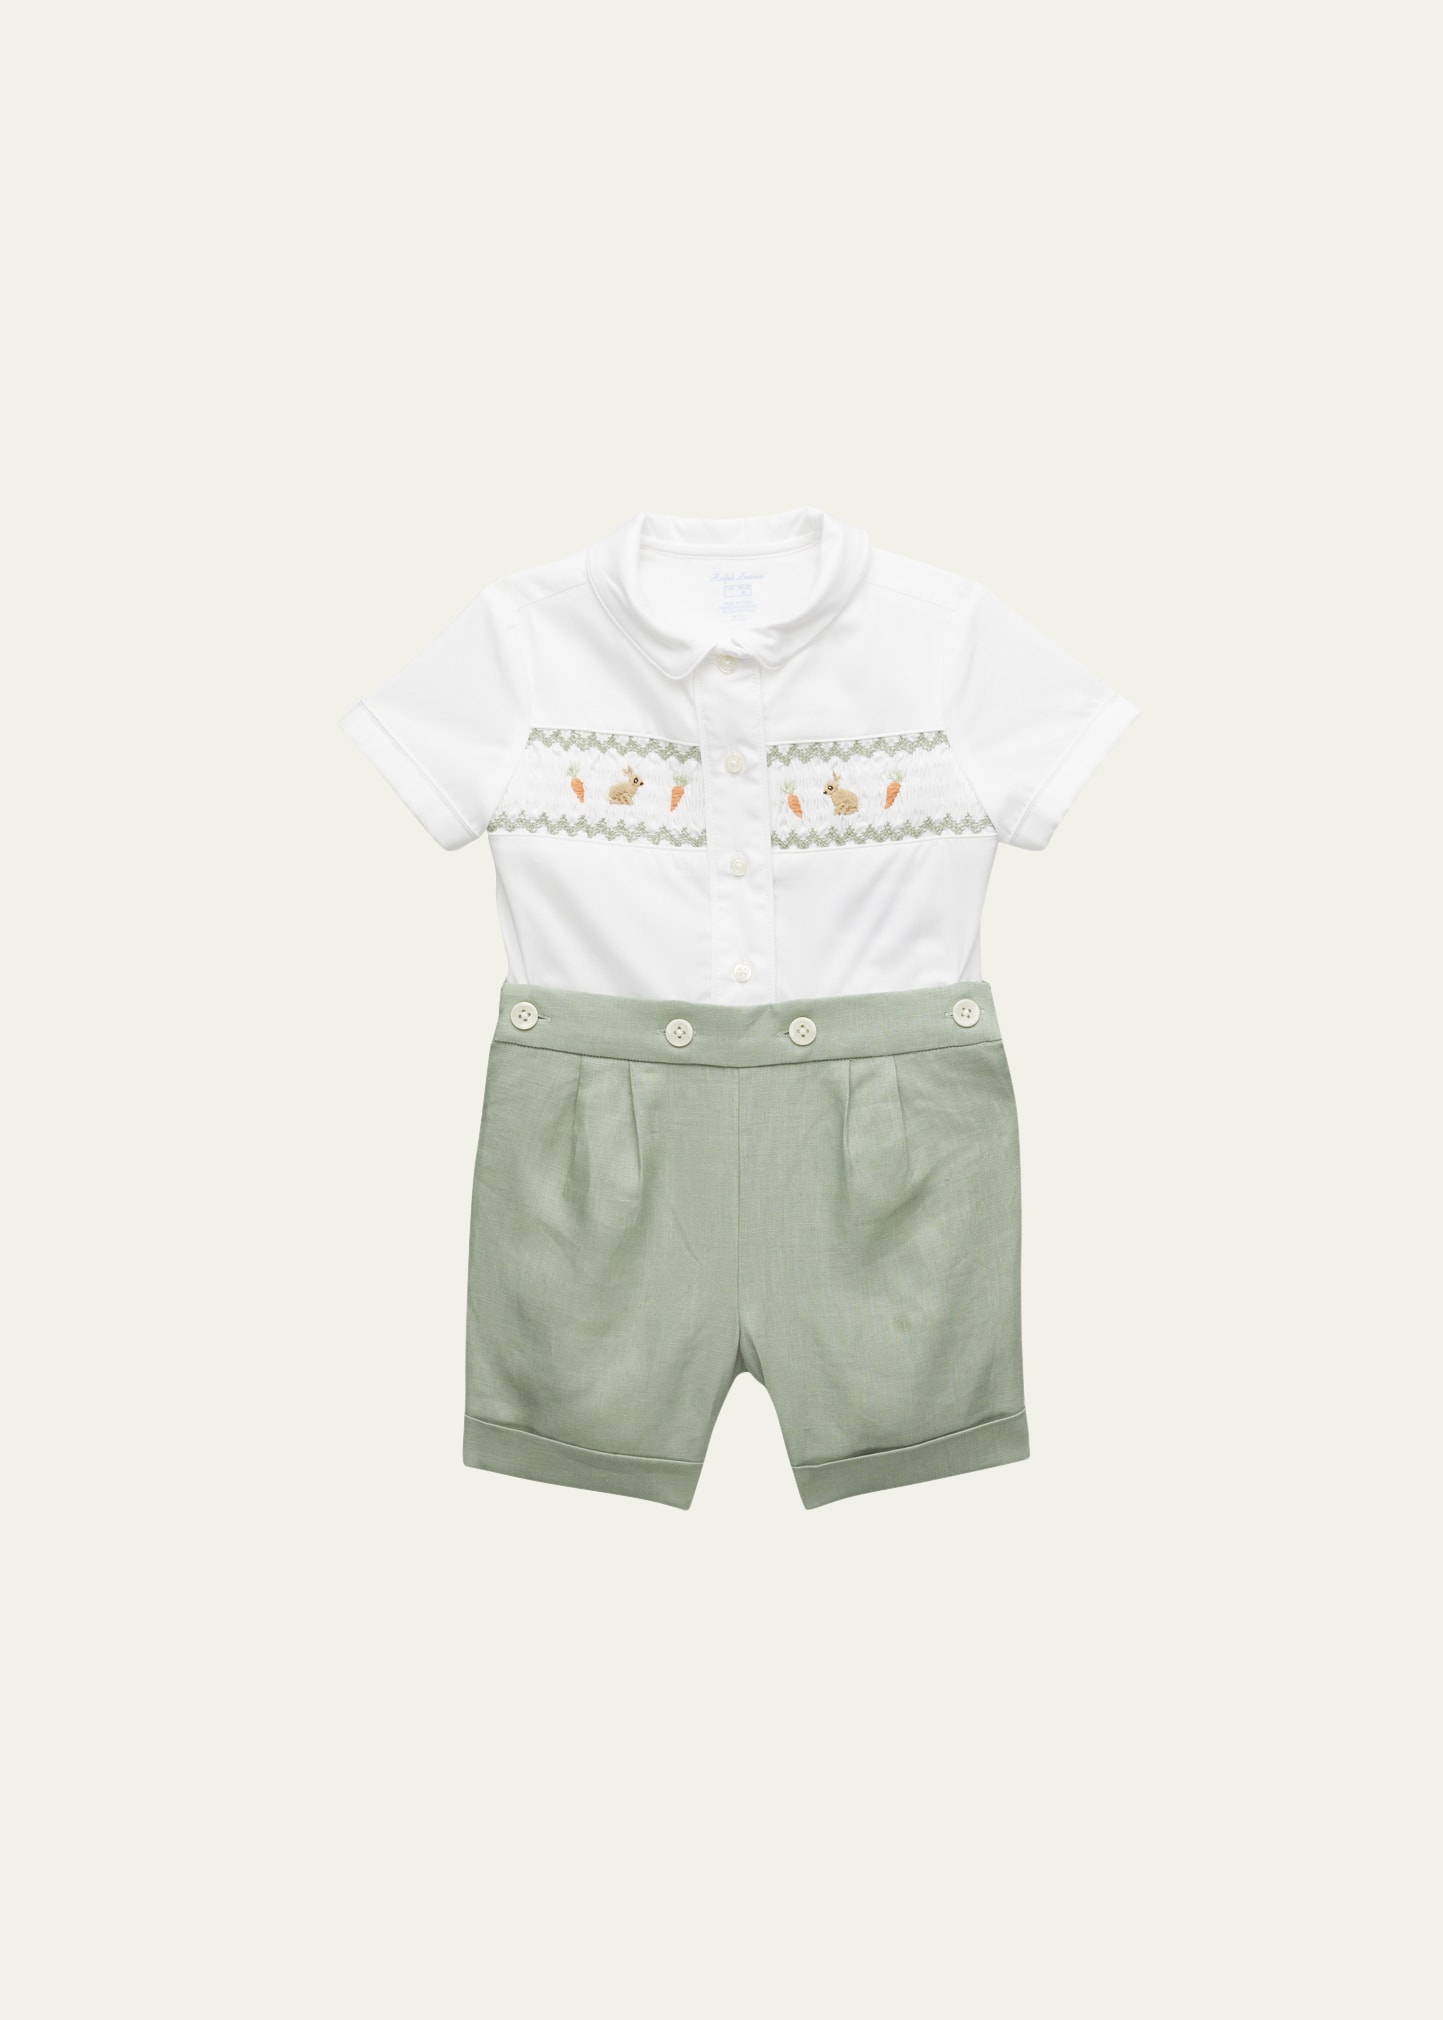 Ralph Lauren Childrenswear Boy's Hand Smocked Shirt And Pants Set, Size 9M-24M  - Bergdorf Goodman